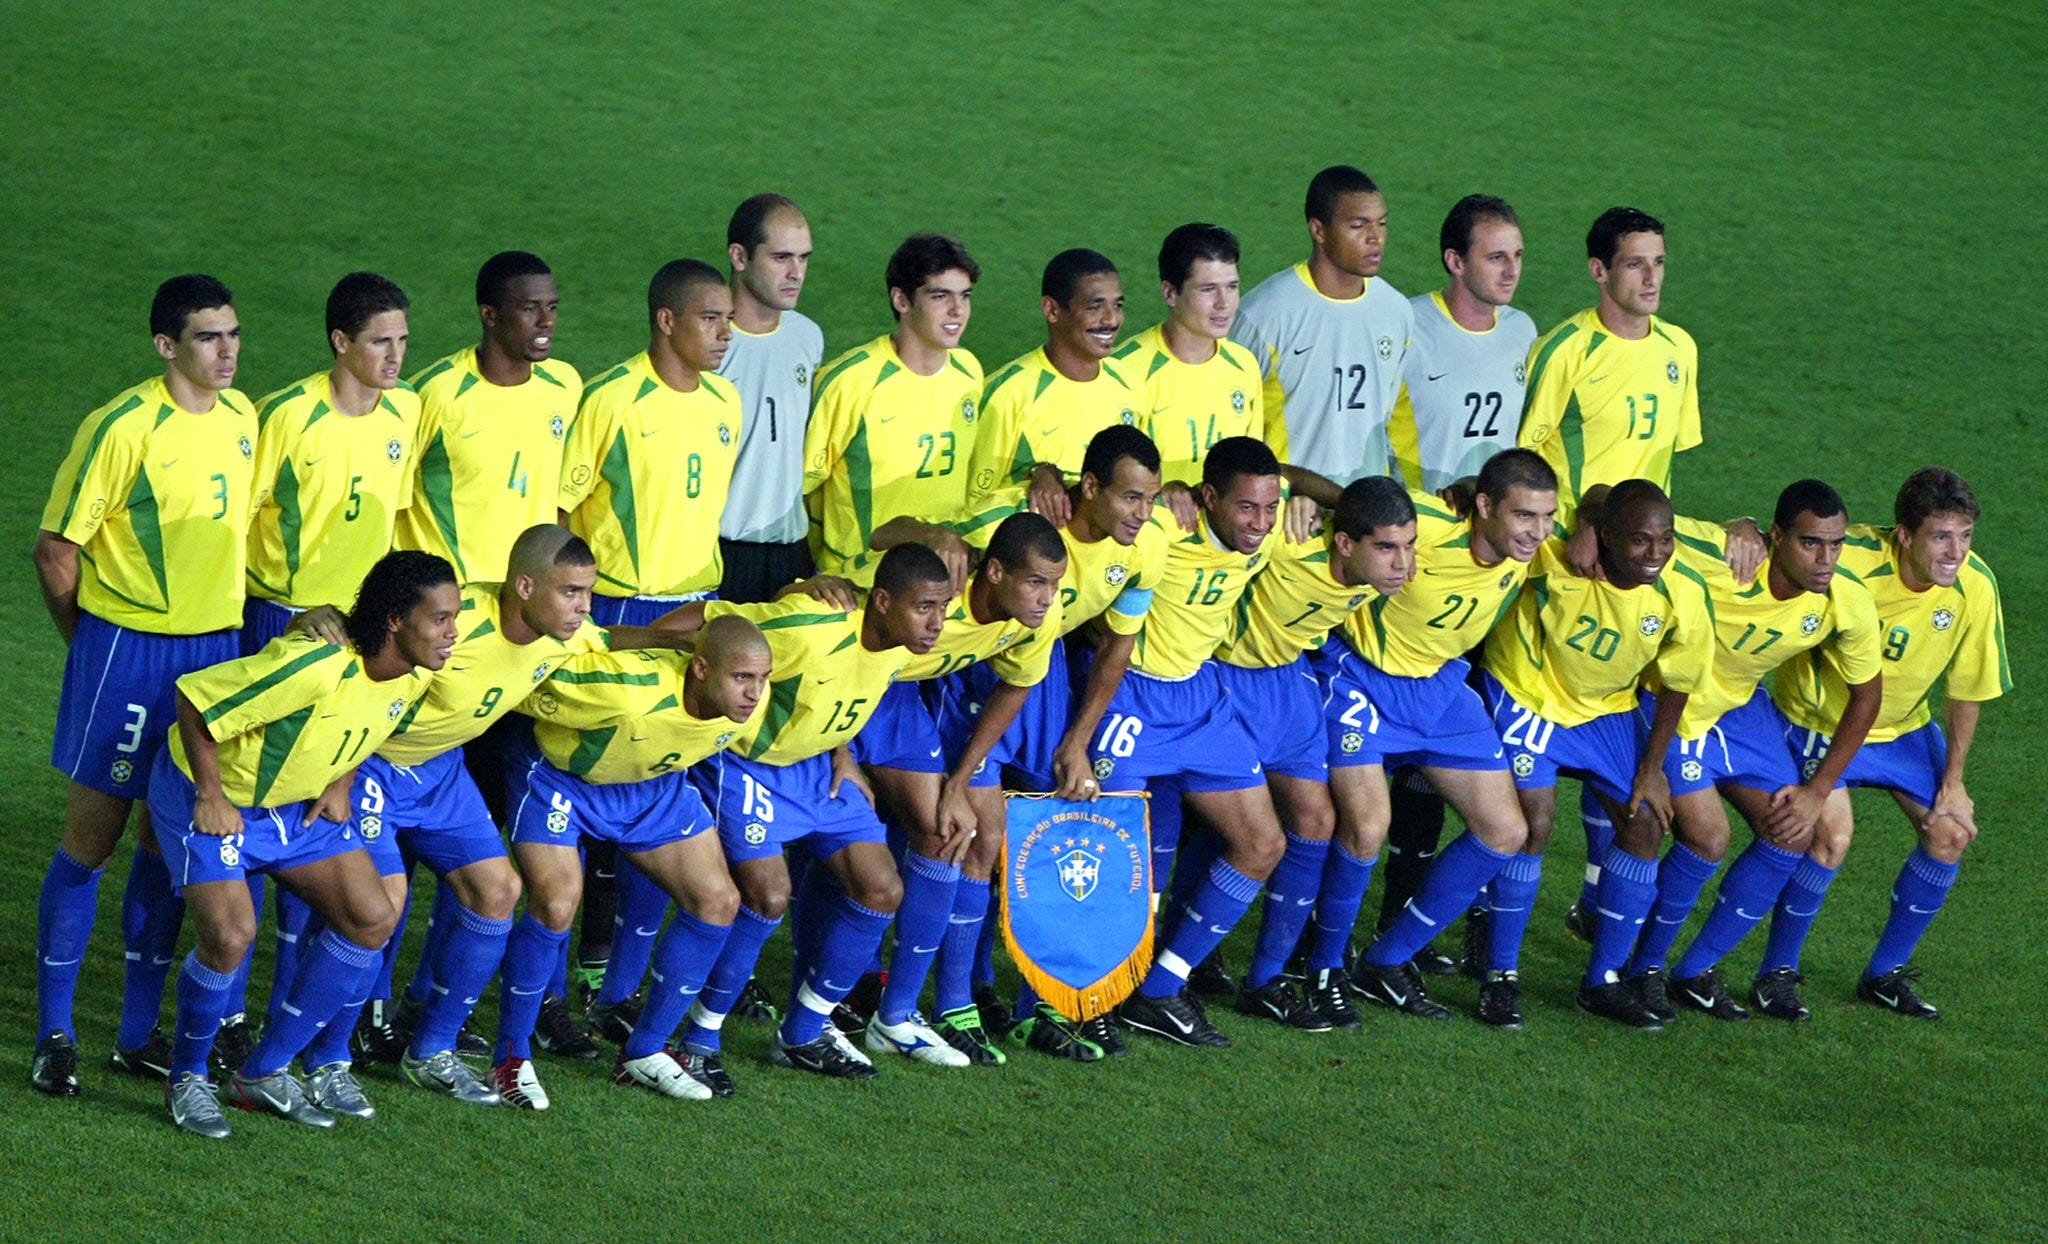 Brazil 2002 squad